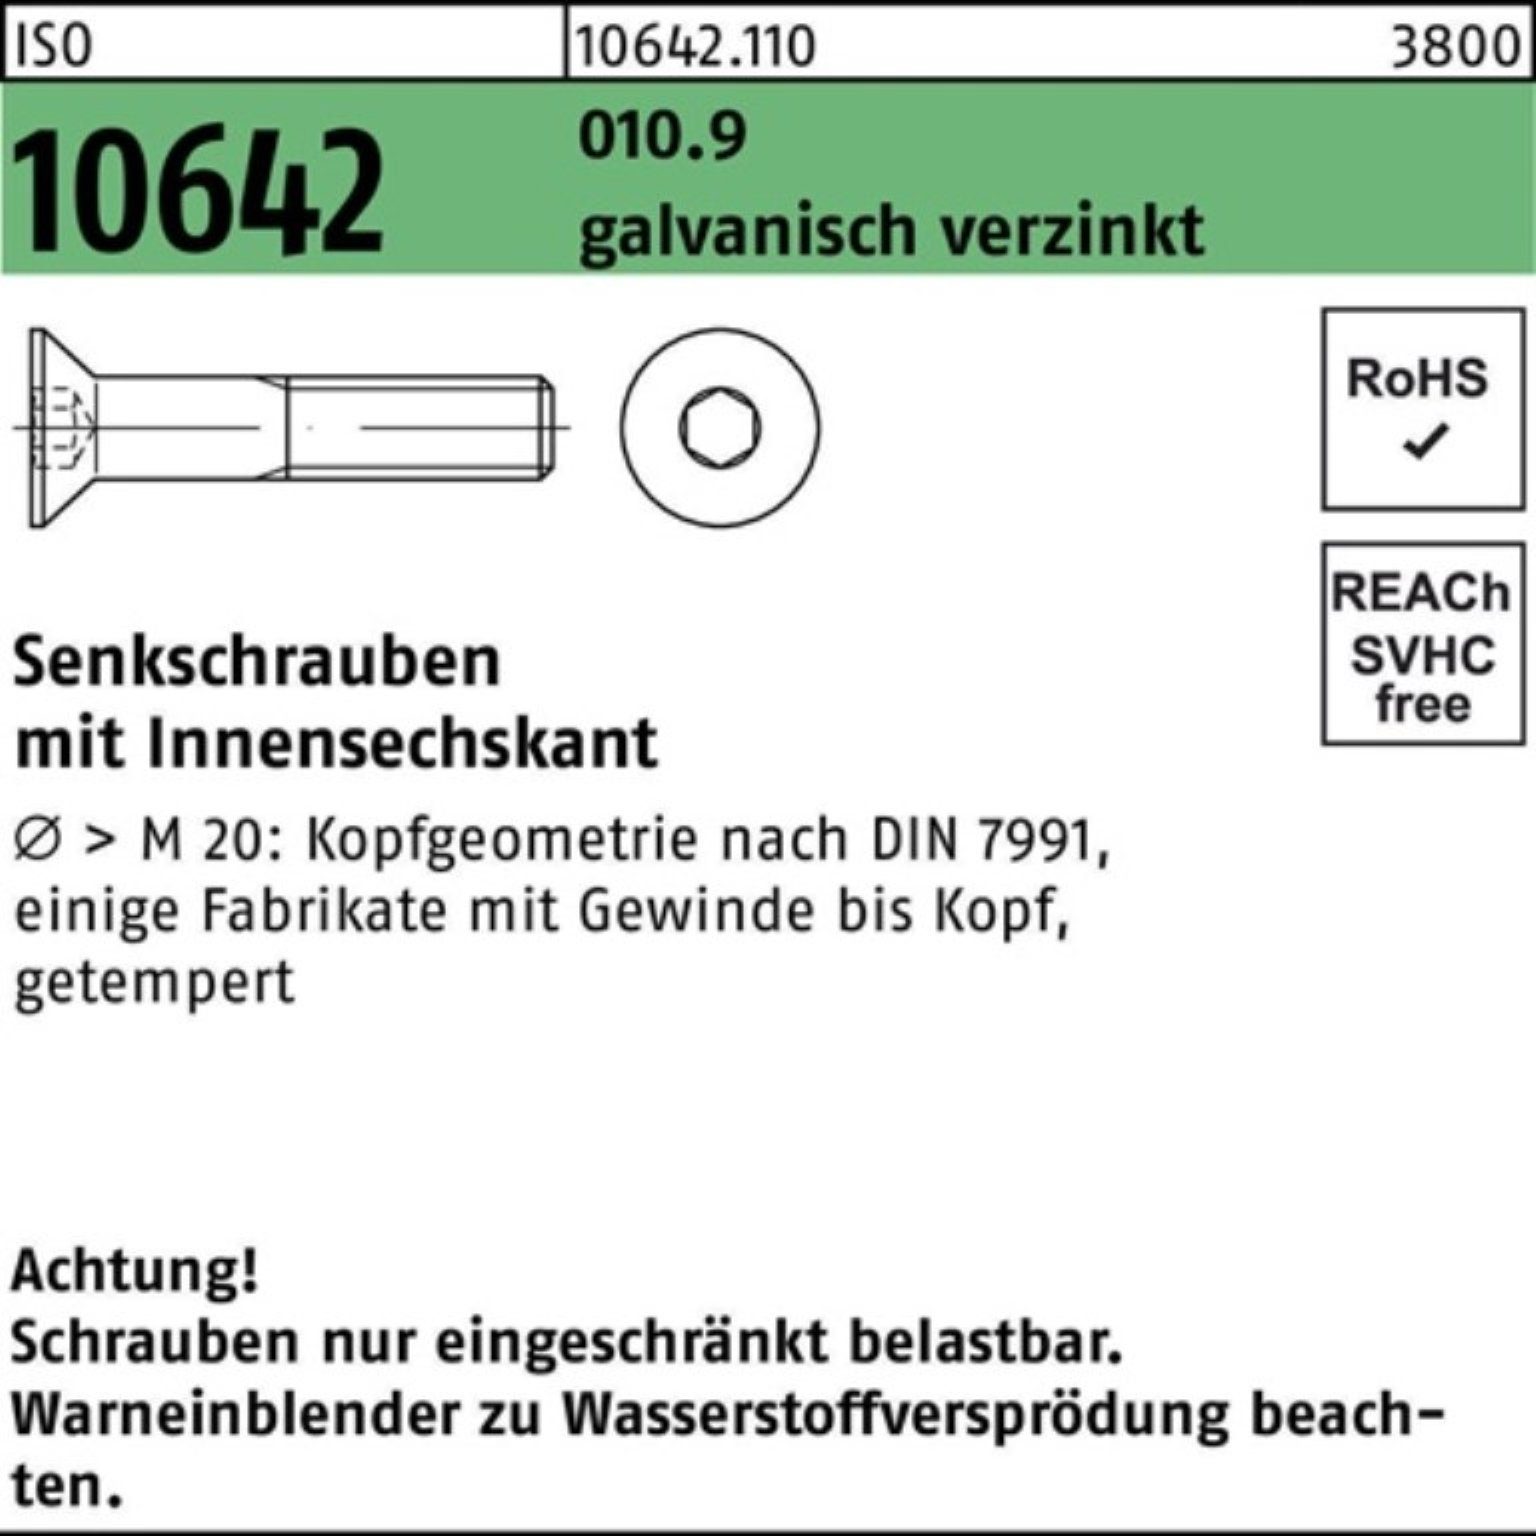 Reyher Senkschraube 200er Pack Senkschraube ISO 20 010.9 galv.verz. 10642 M6x Innen-6kt 50